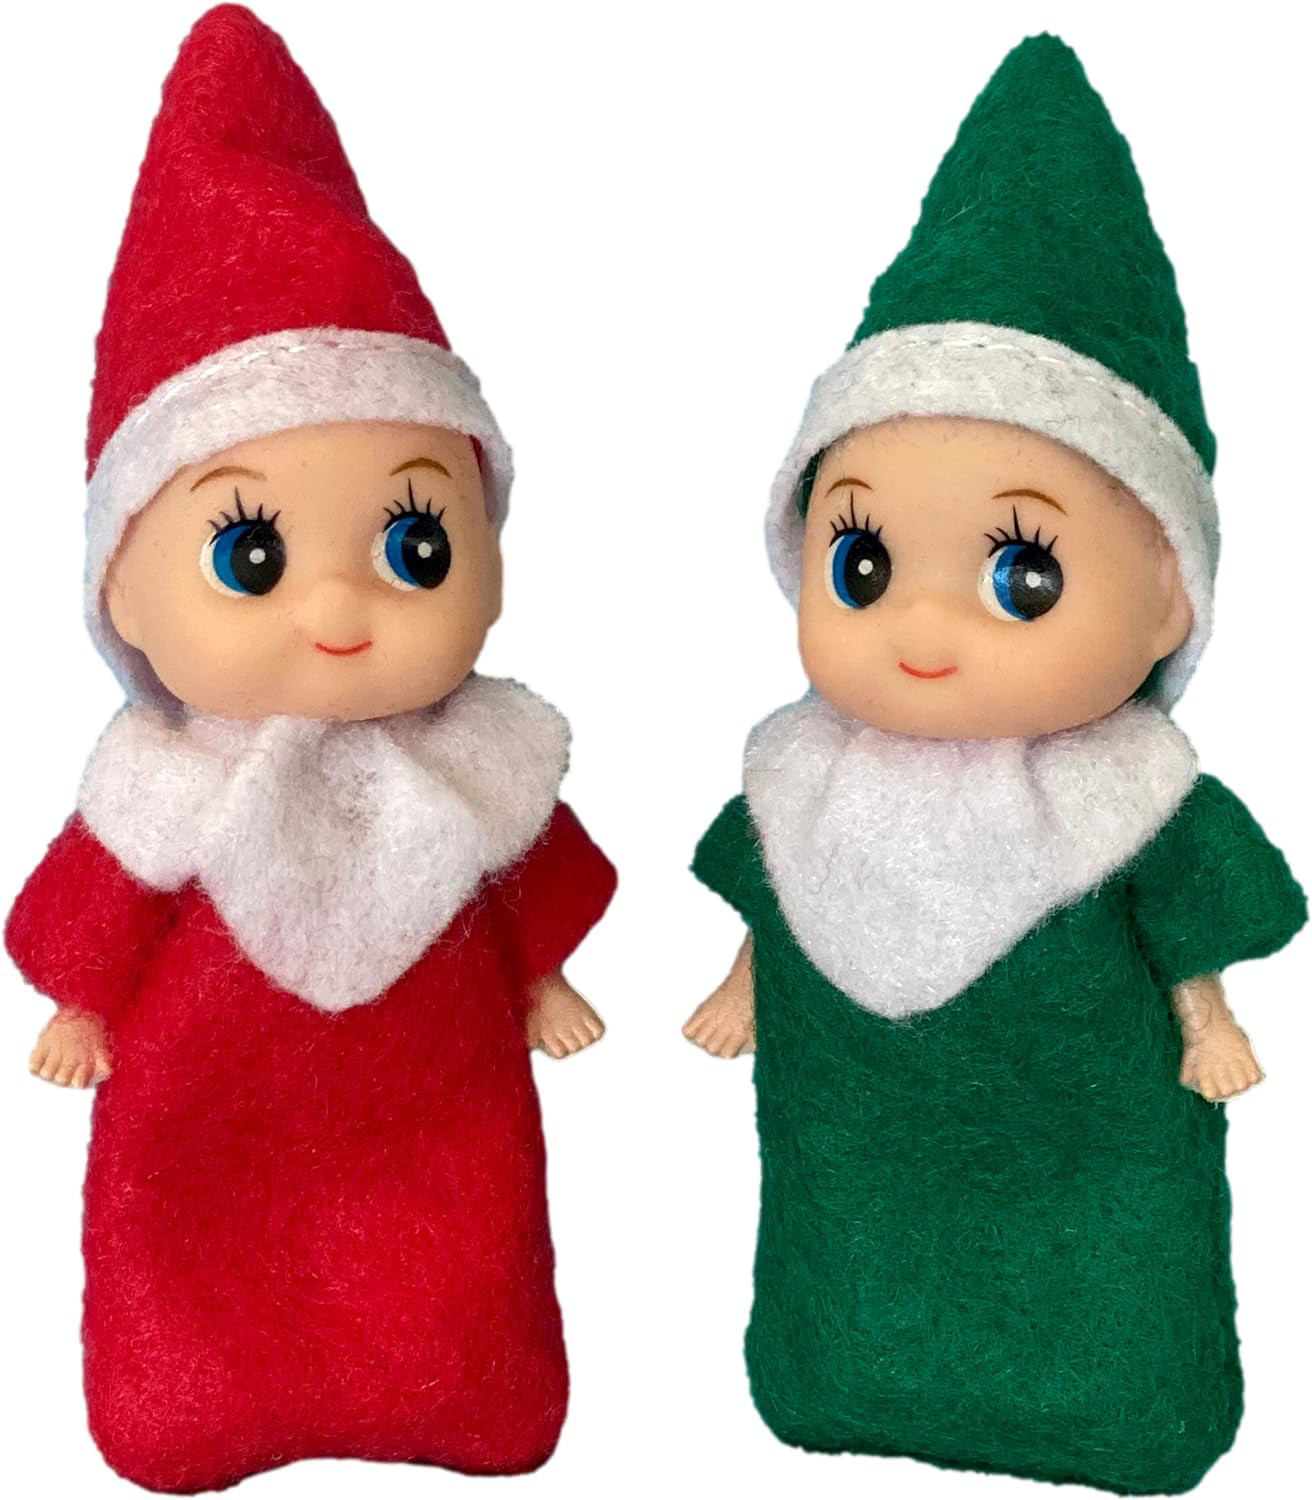 Picki Nicki Elf Baby Twins- Two Little Christmas Elves, an Elf Baby Boy and Elf